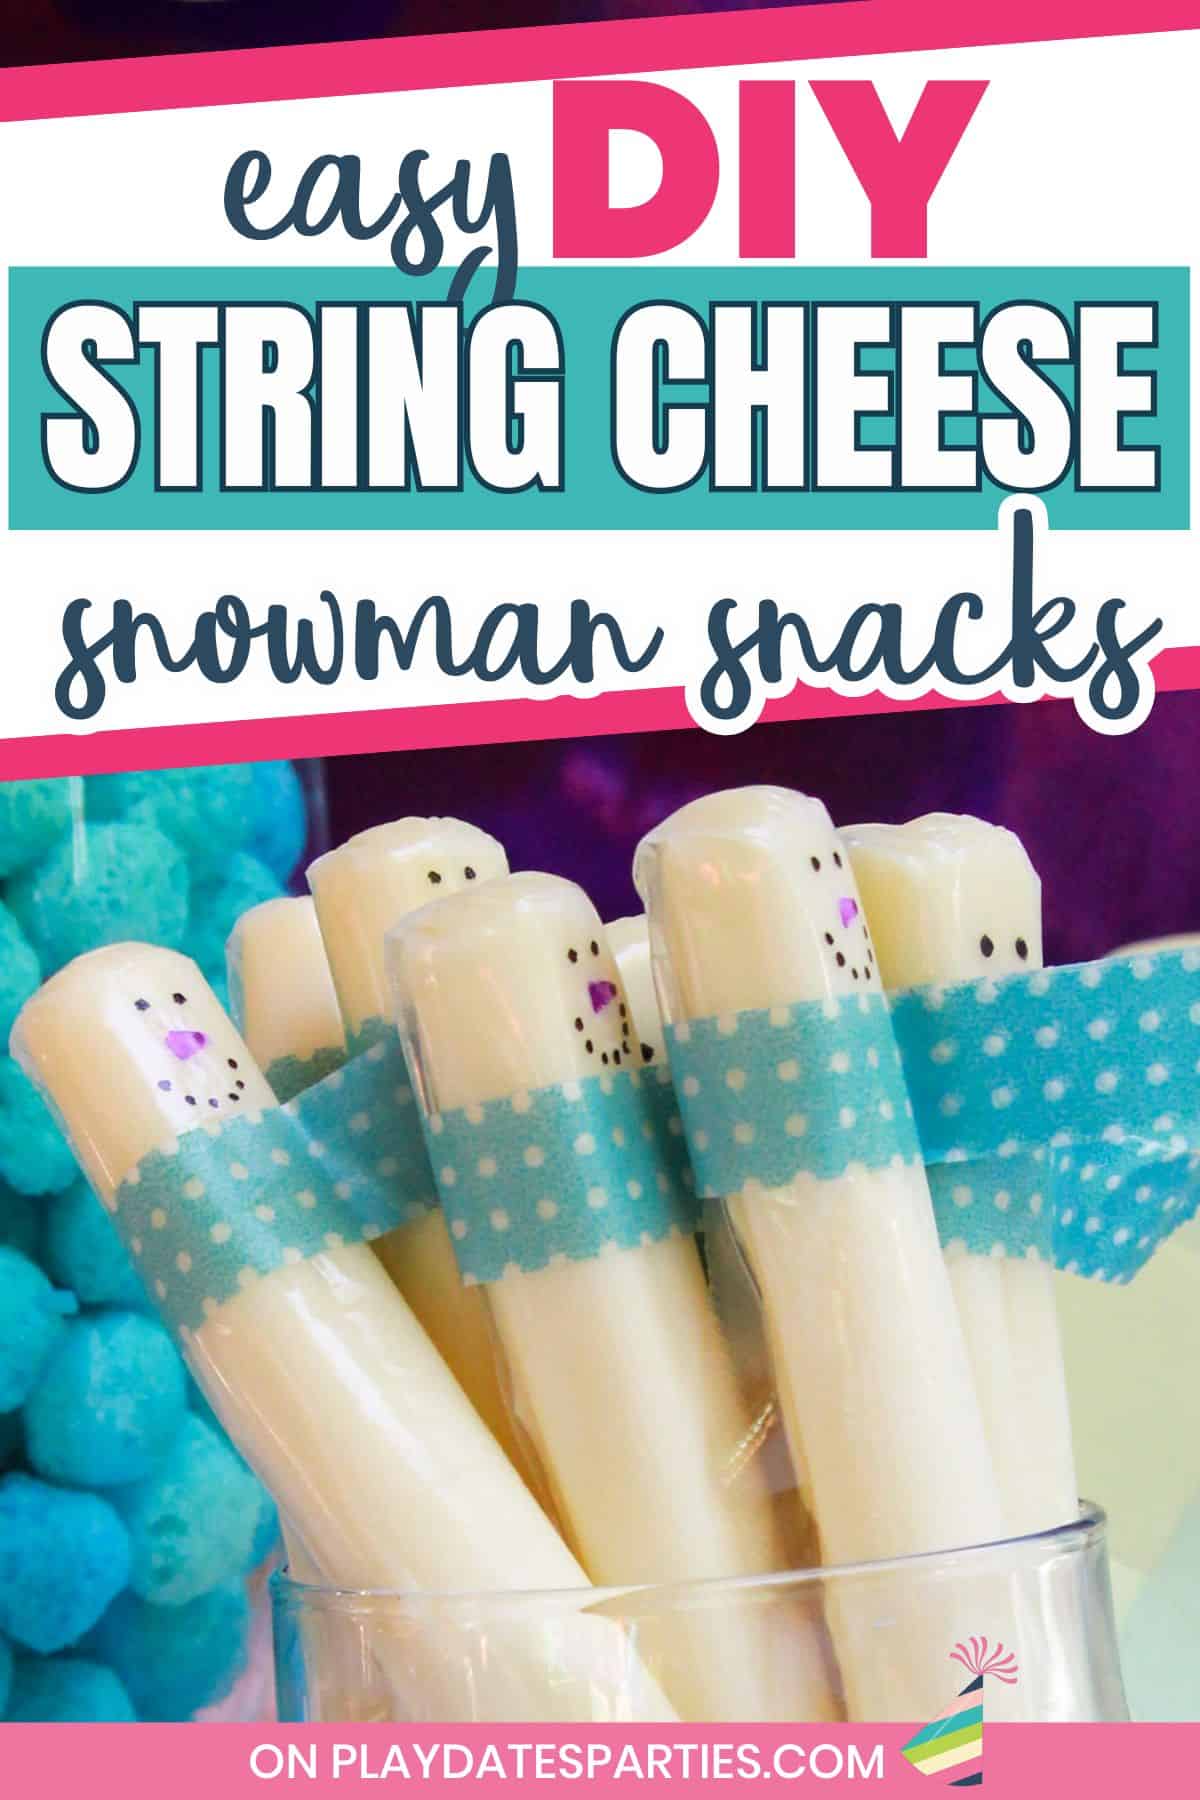 Easy DIY string cheese snowman snacks pin image.